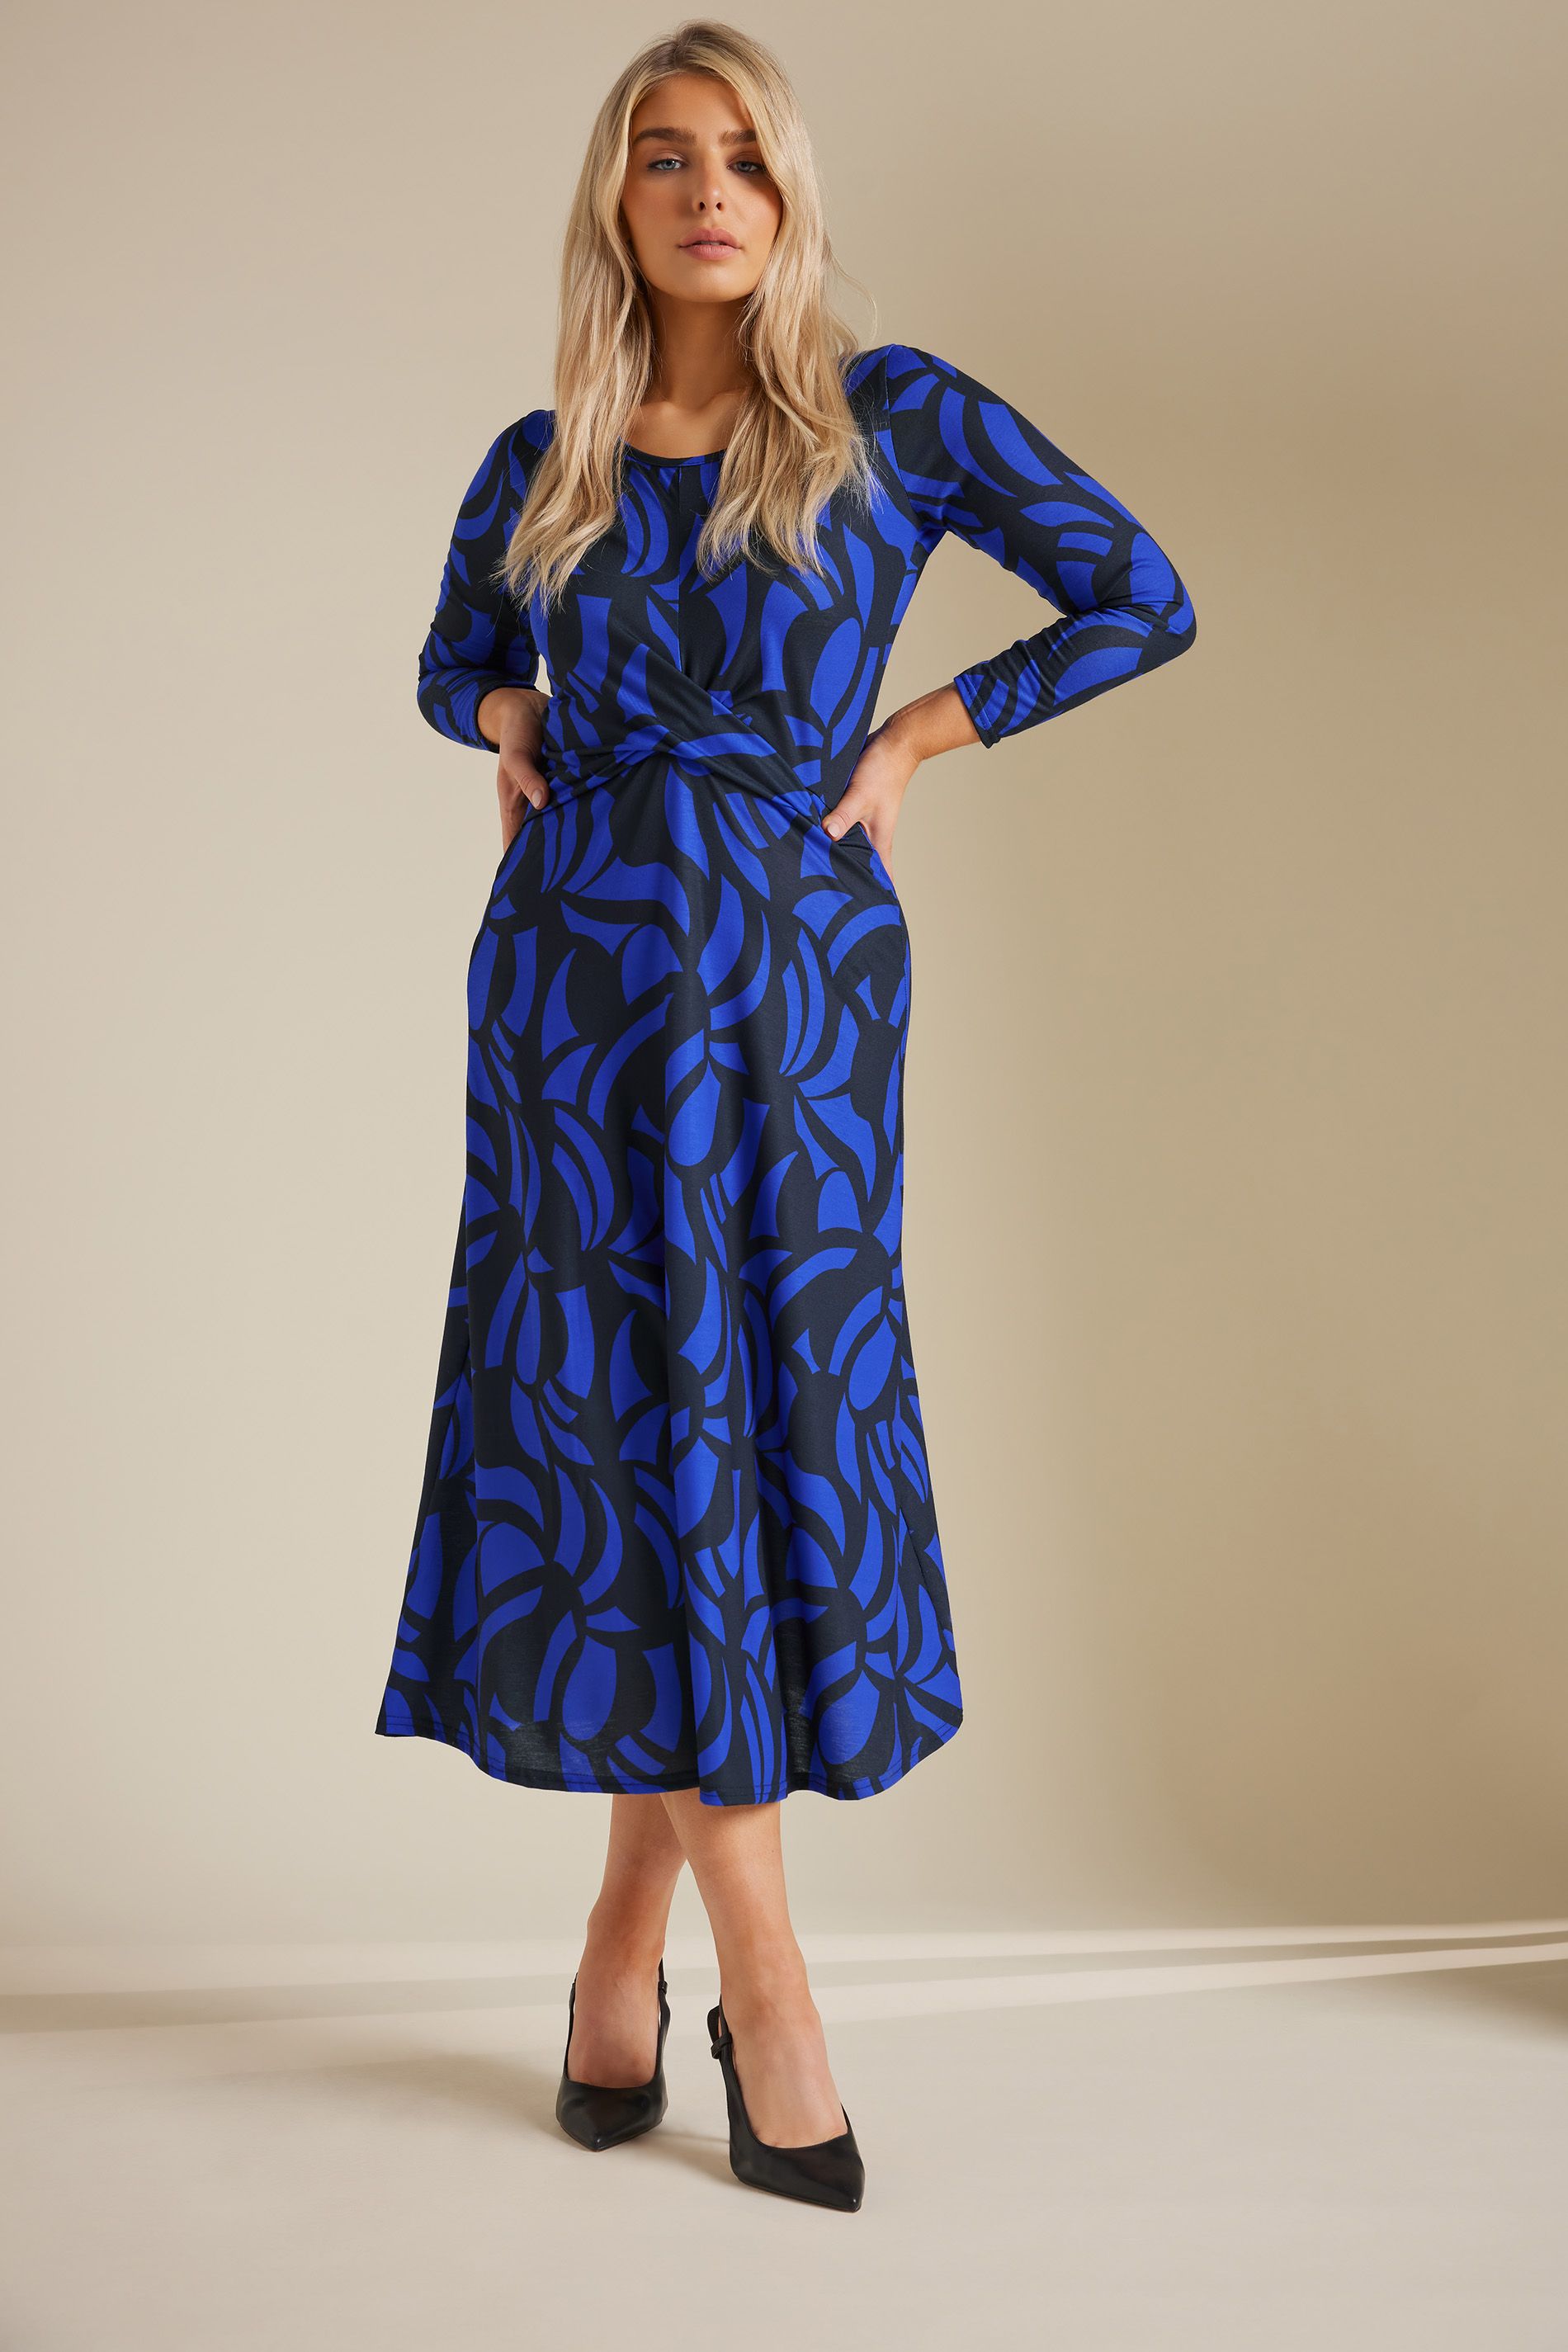 M&Co Black & Blue Geometric Print Twist Front Midaxi Dress | M&Co 1